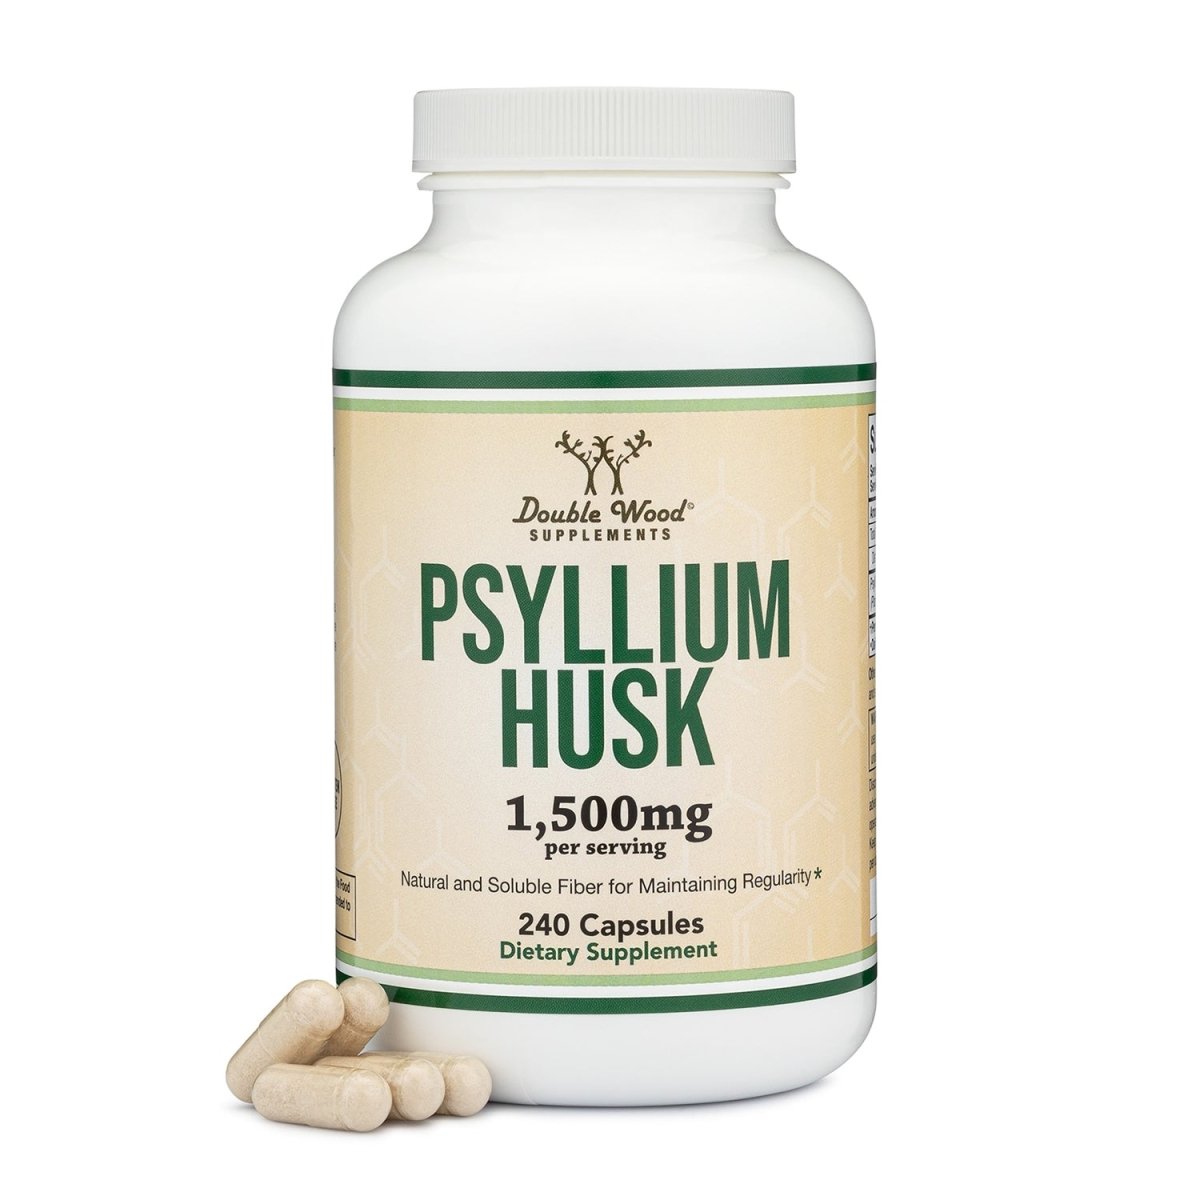 Psyllium Husk Double Pack - Double Wood Supplements